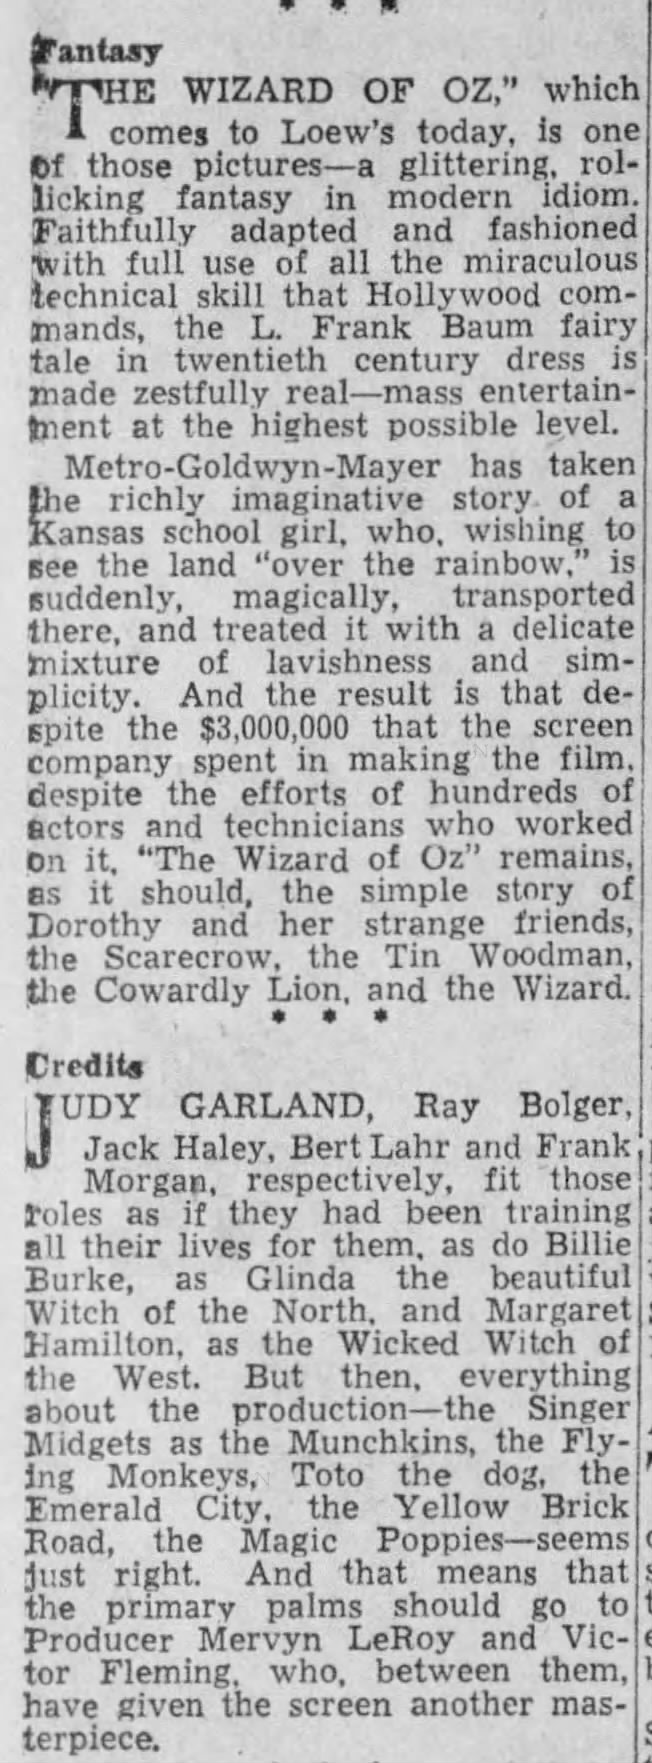 Wizard of Oz is "a glittering, rollicking fantasy in modern idiom"